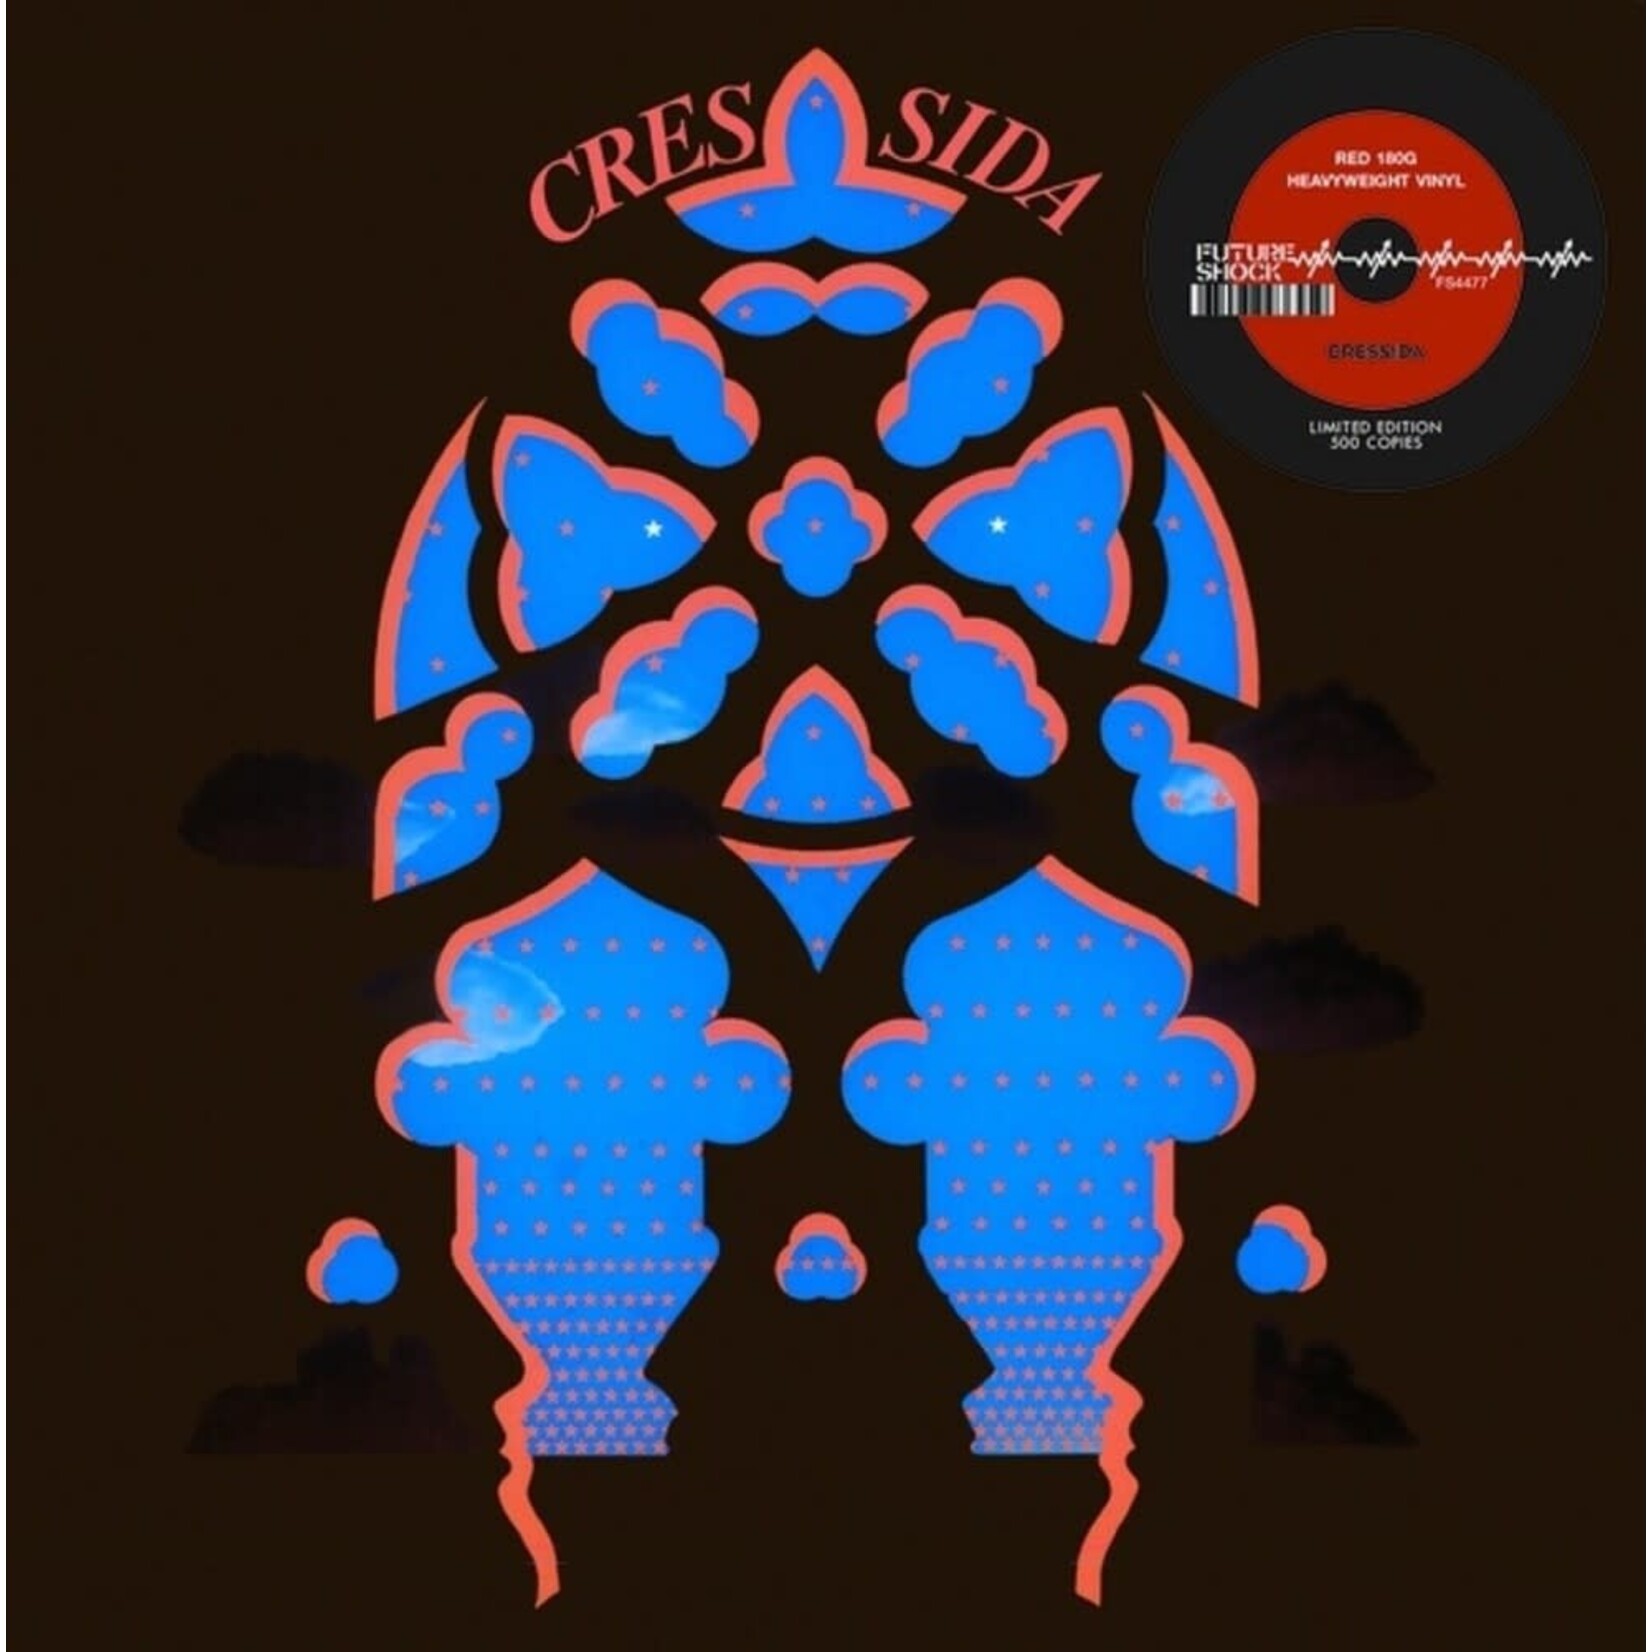 [New] Cressida: Cressida (red vinyl) [FUTURE SHOCK]